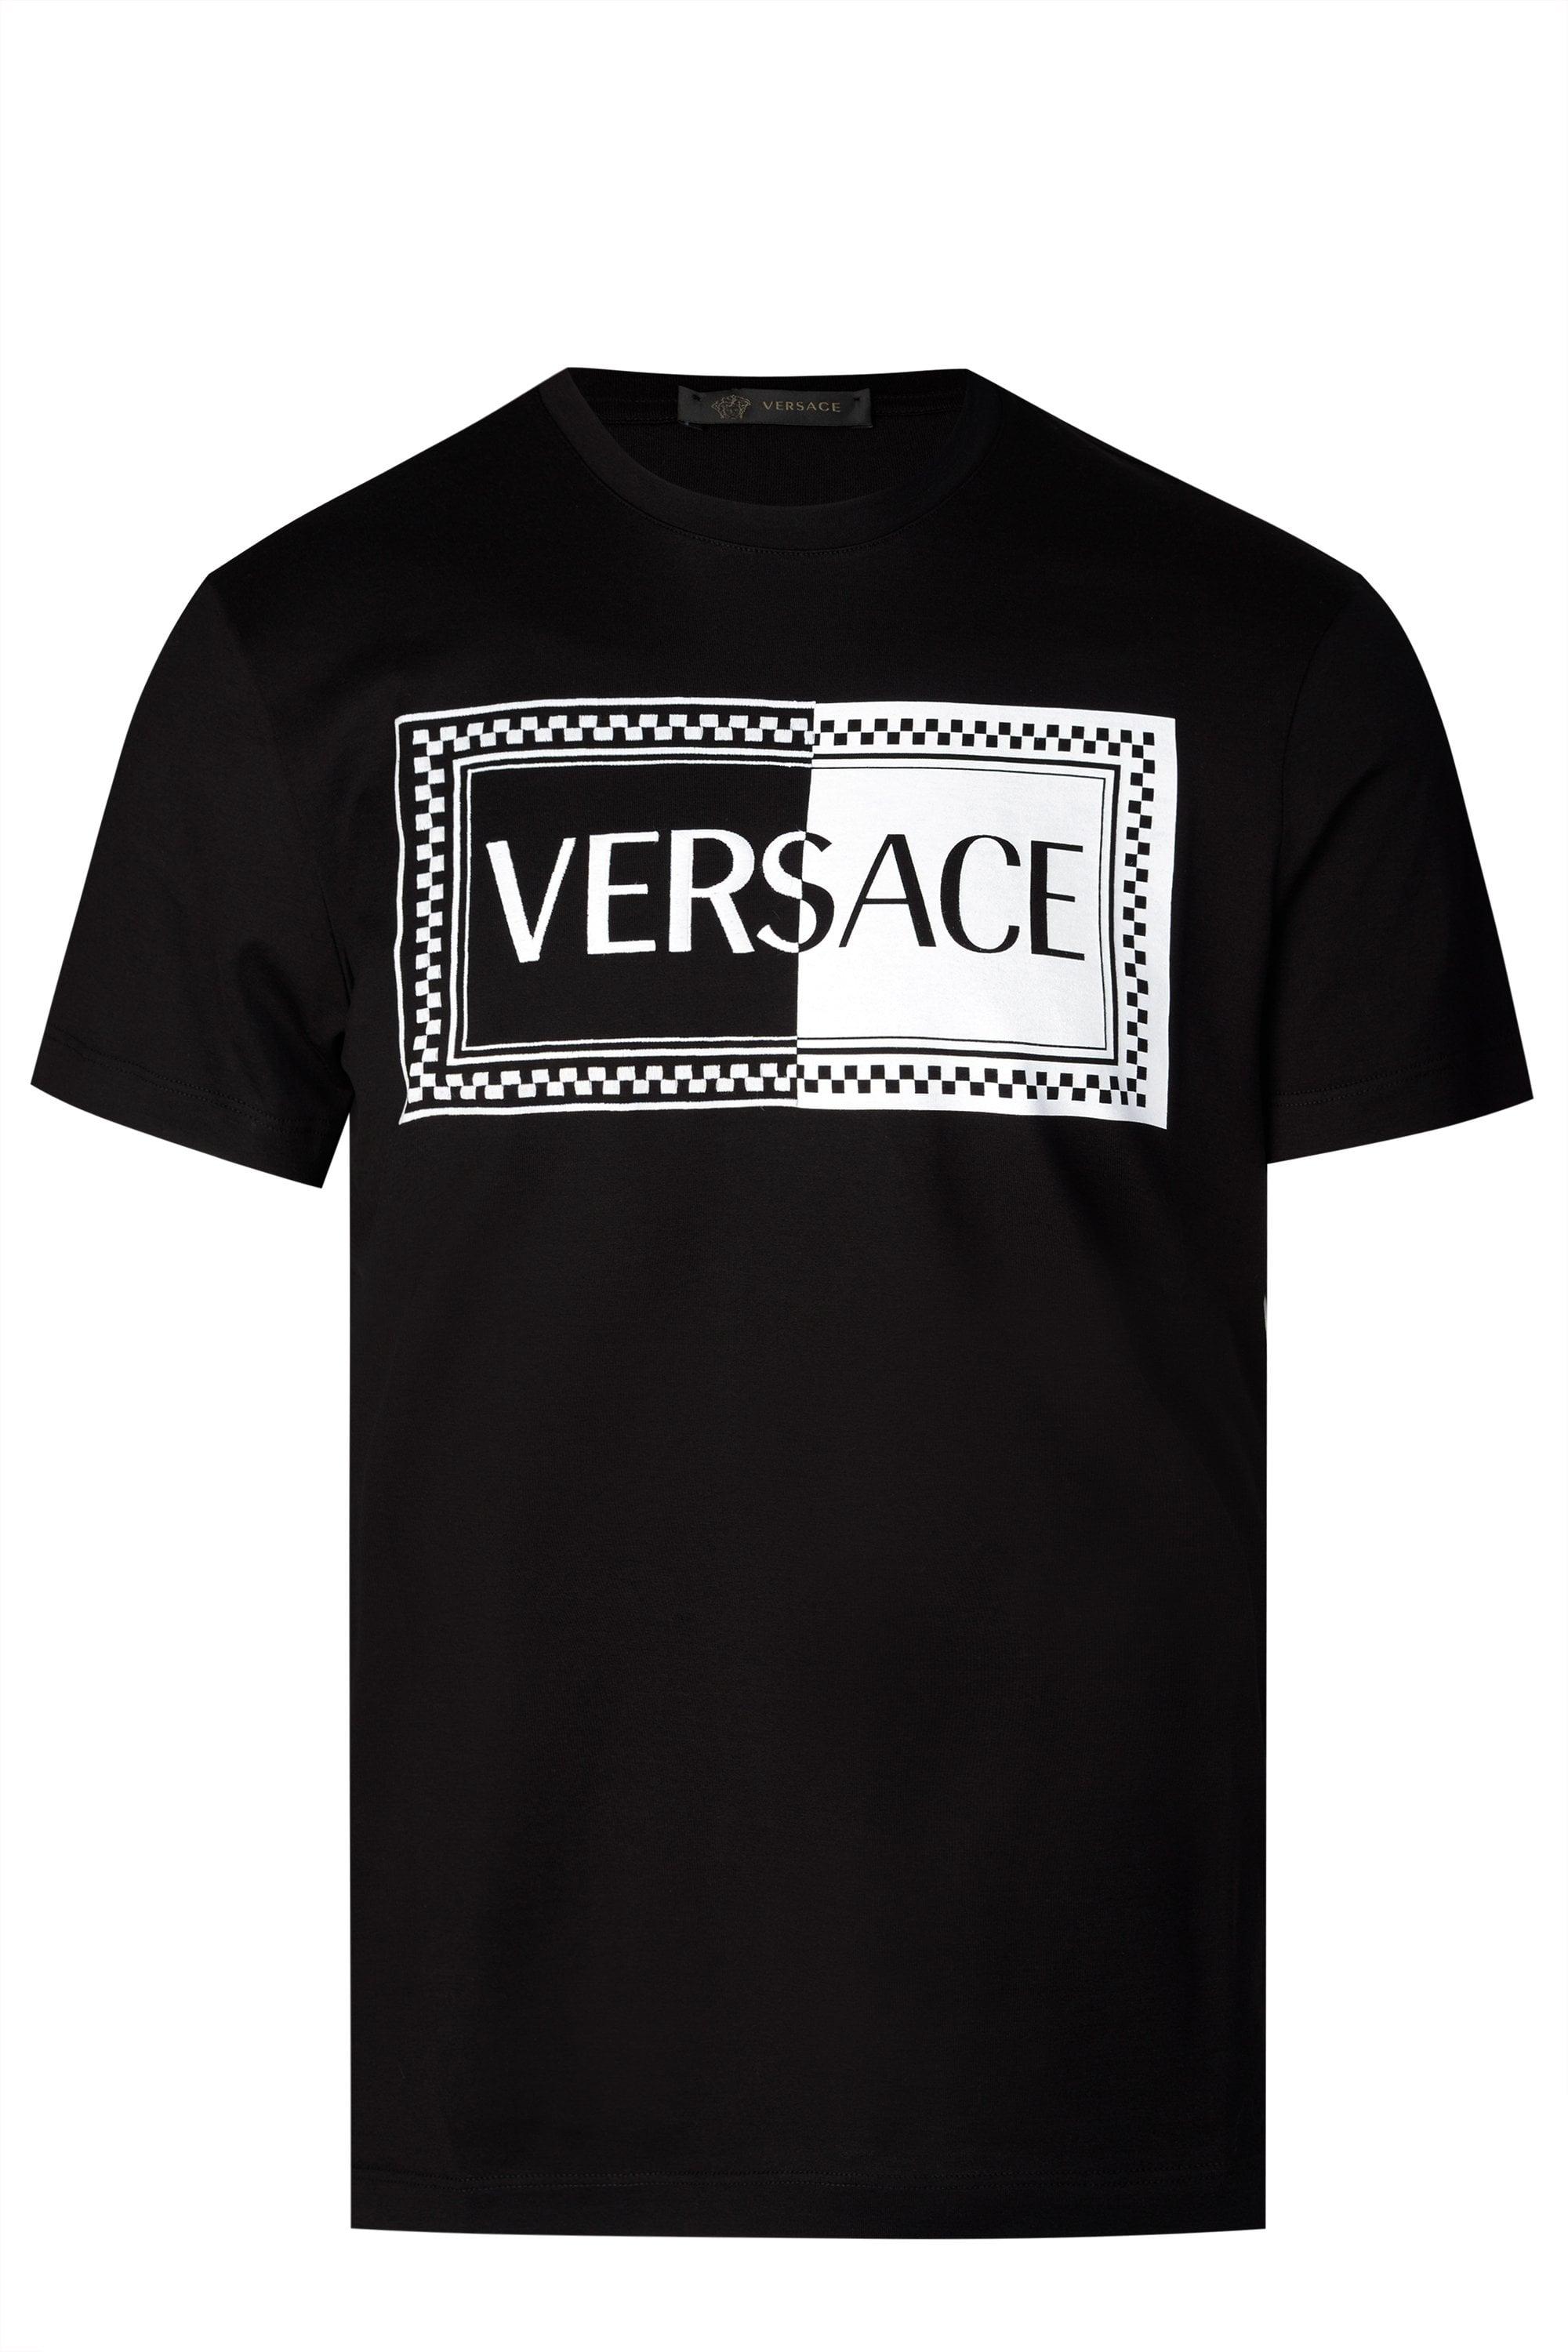 Versace Cotton Box Logo T-shirt in Black for Men - Lyst